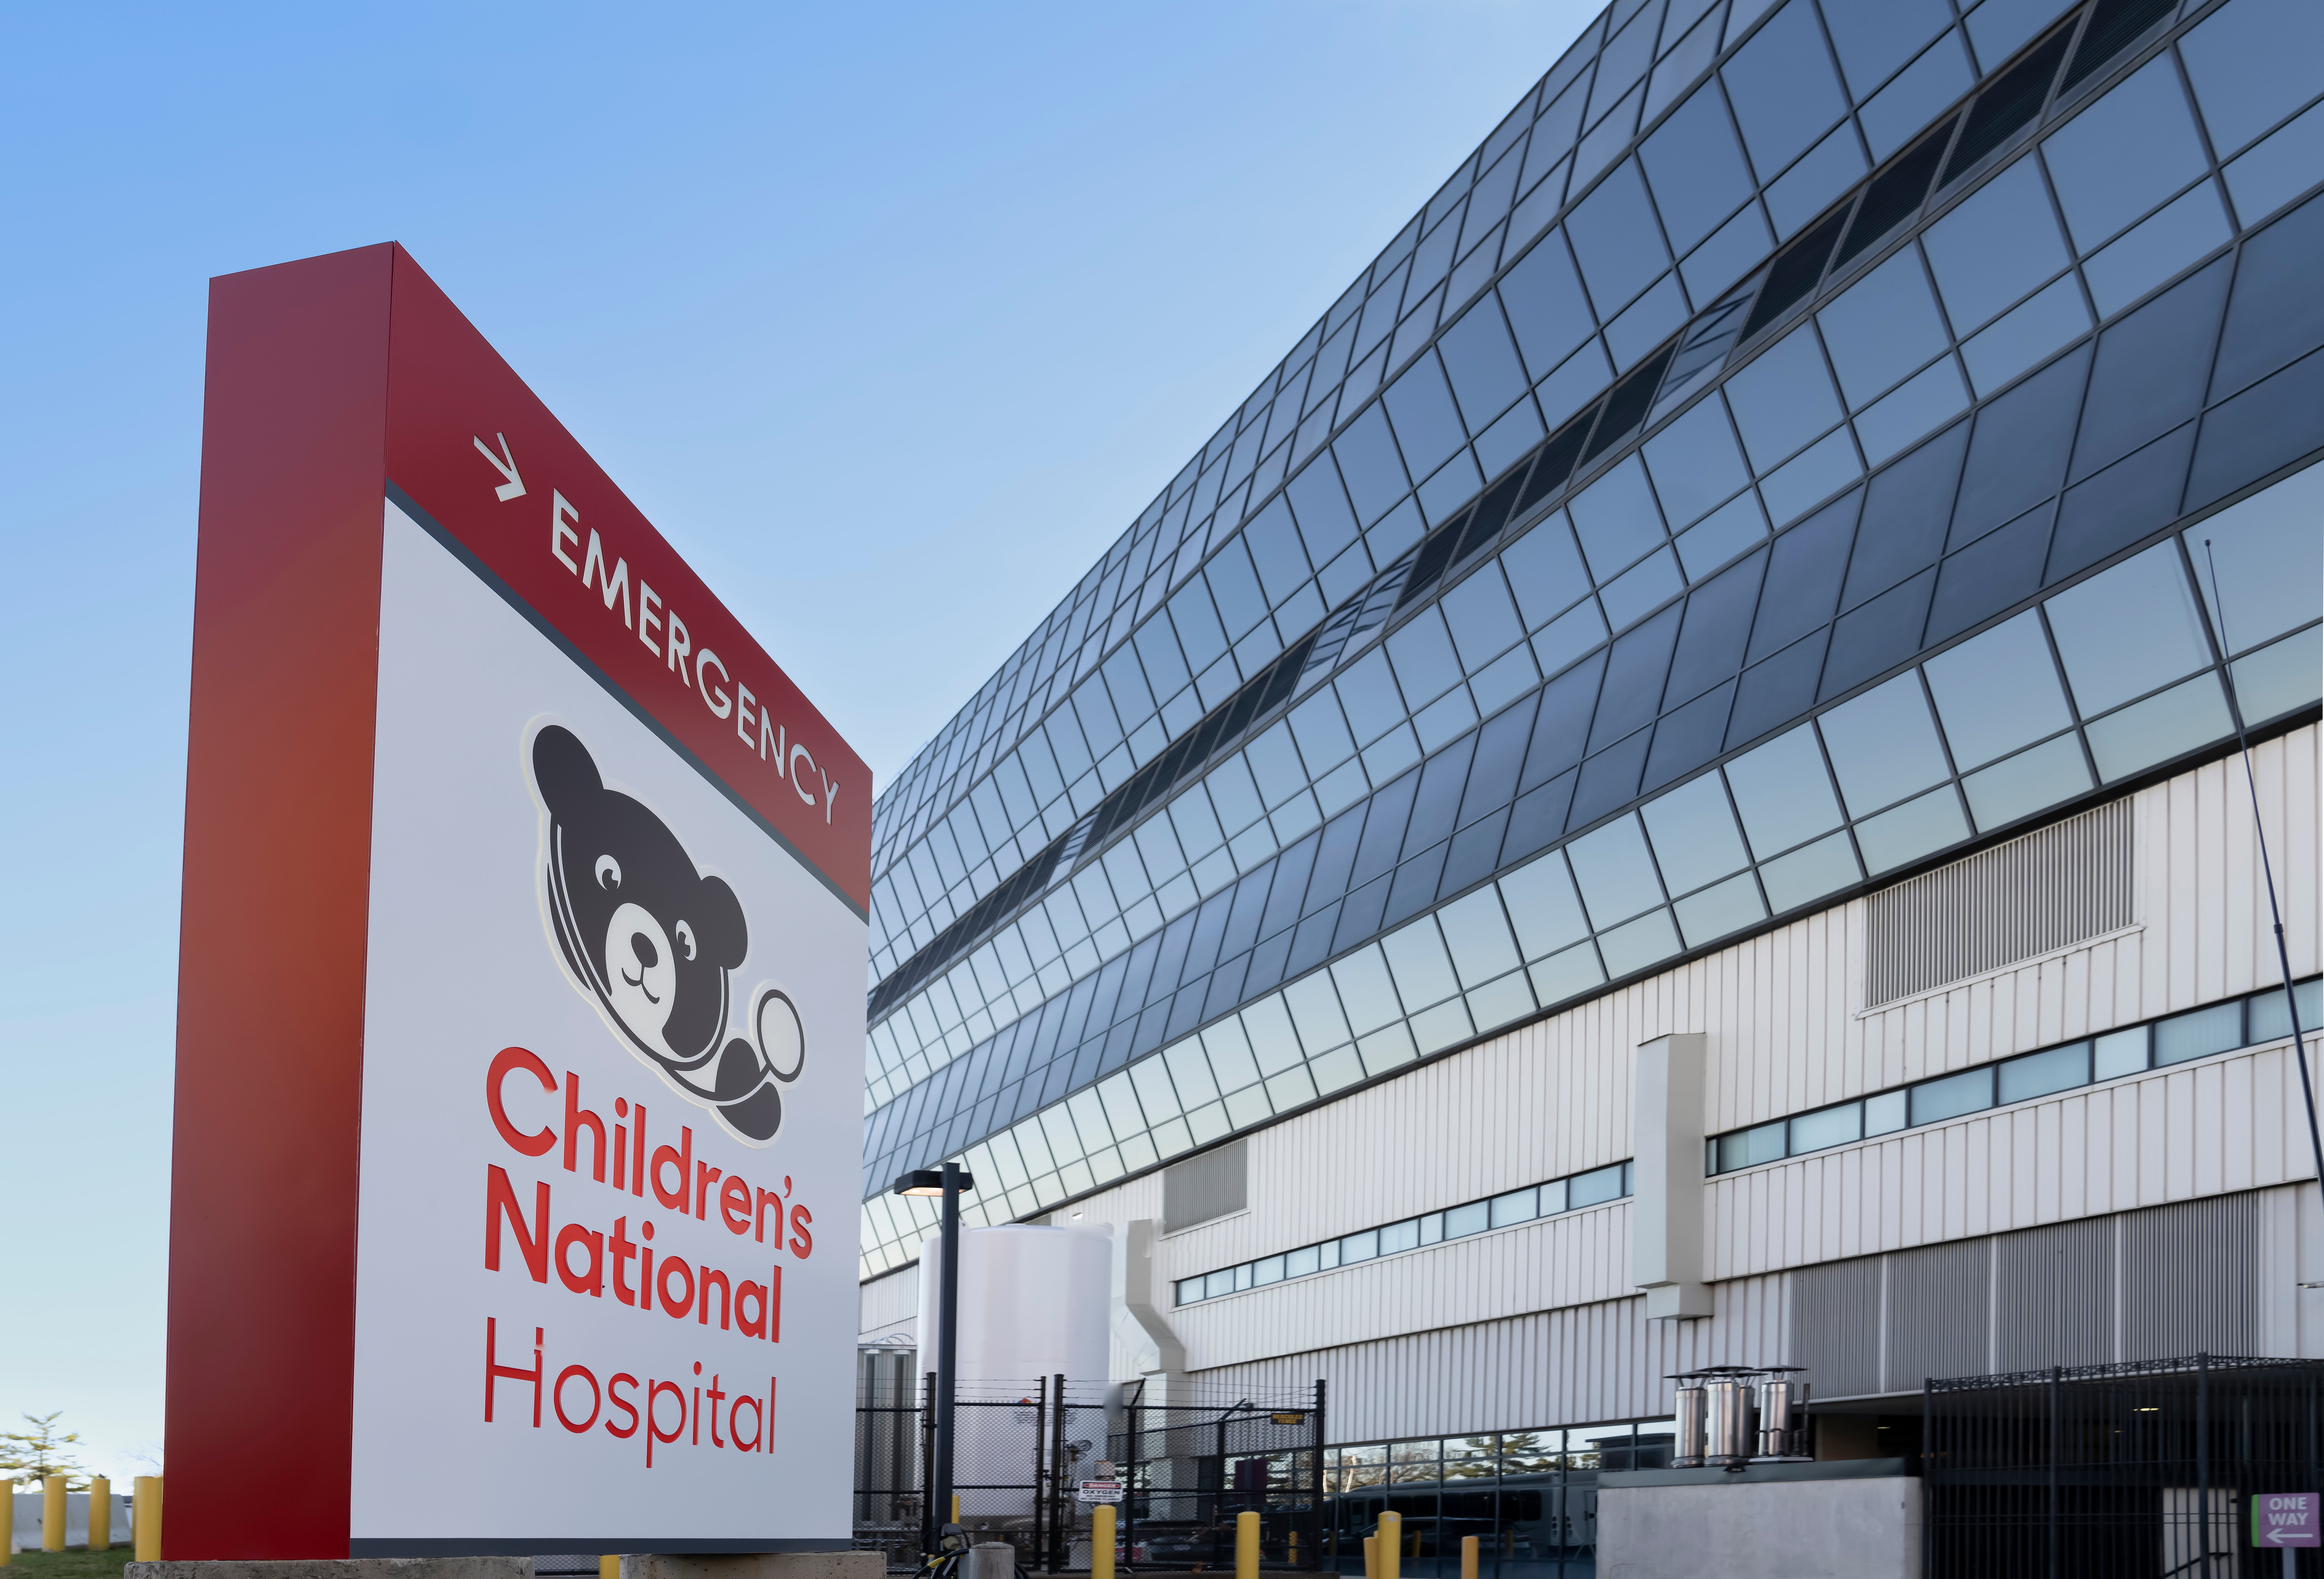 Entrance sign in front of Children's National Hospital Emergency Department